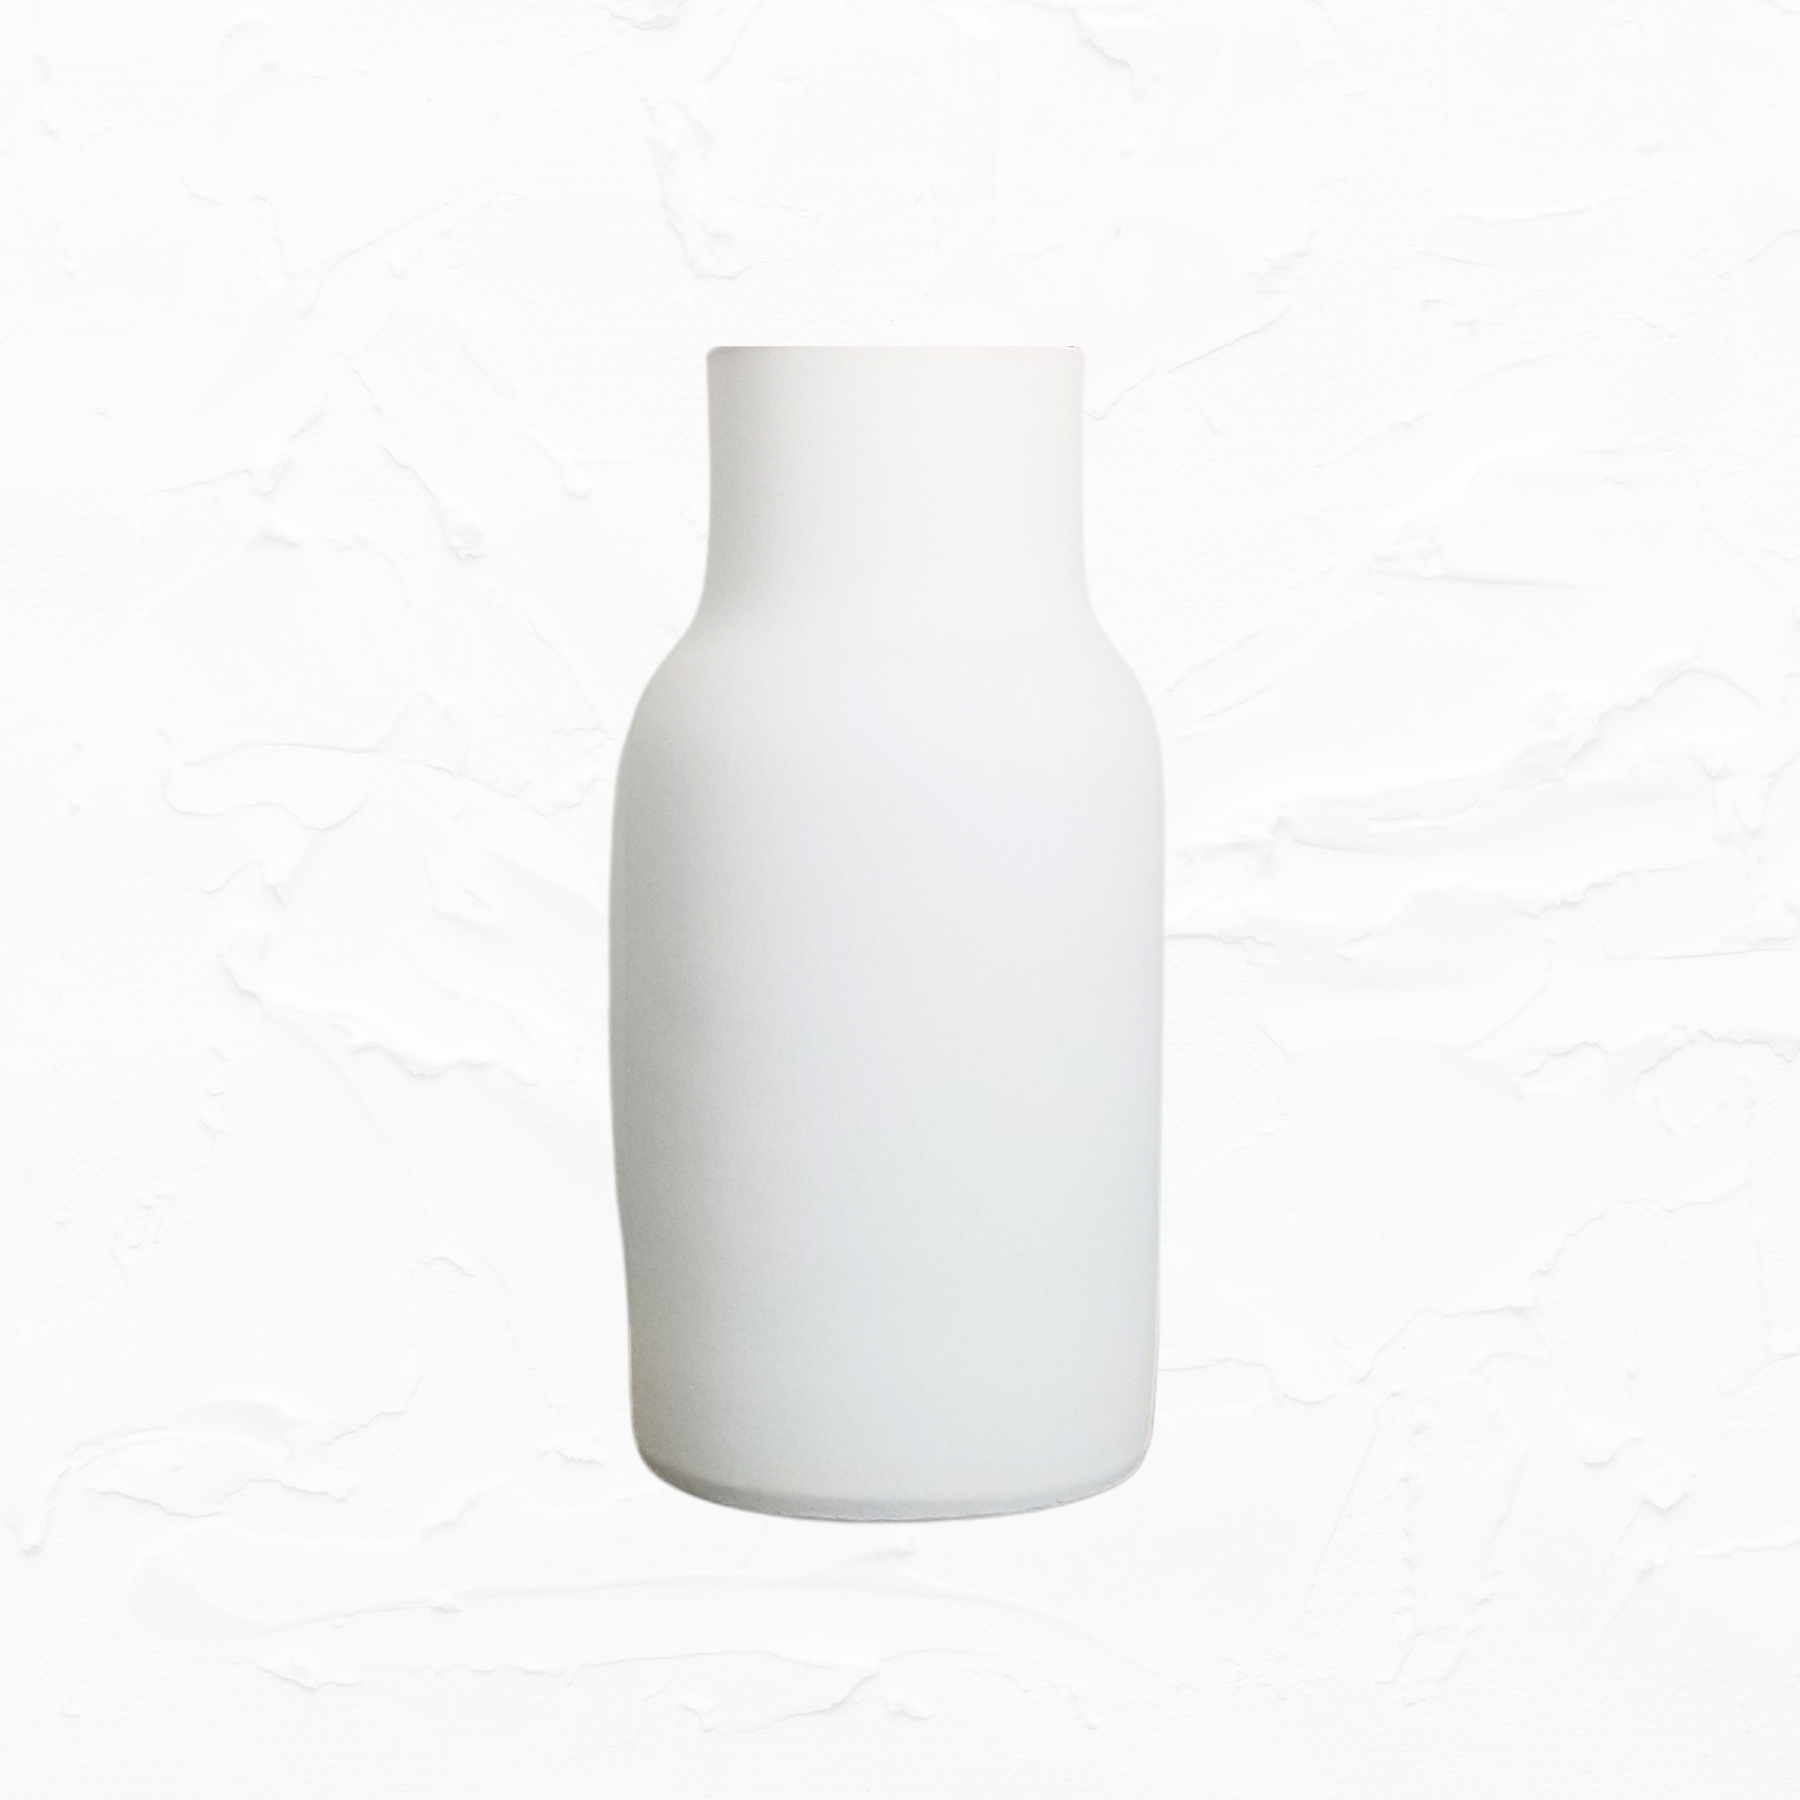 White Earthenware Vase